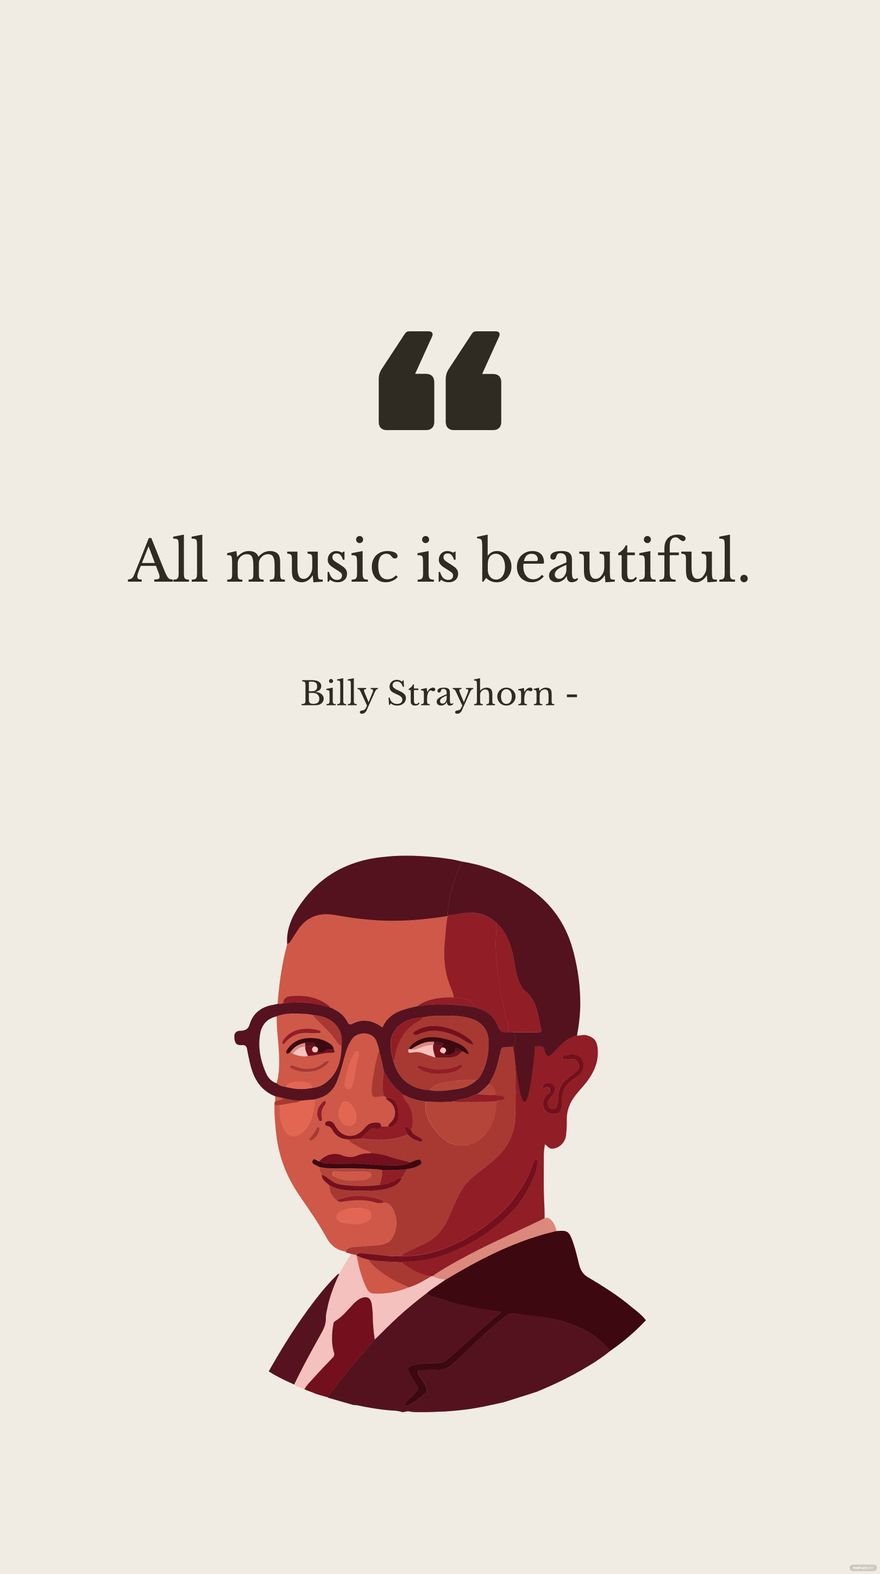 Billy Strayhorn - All music is beautiful. in JPG